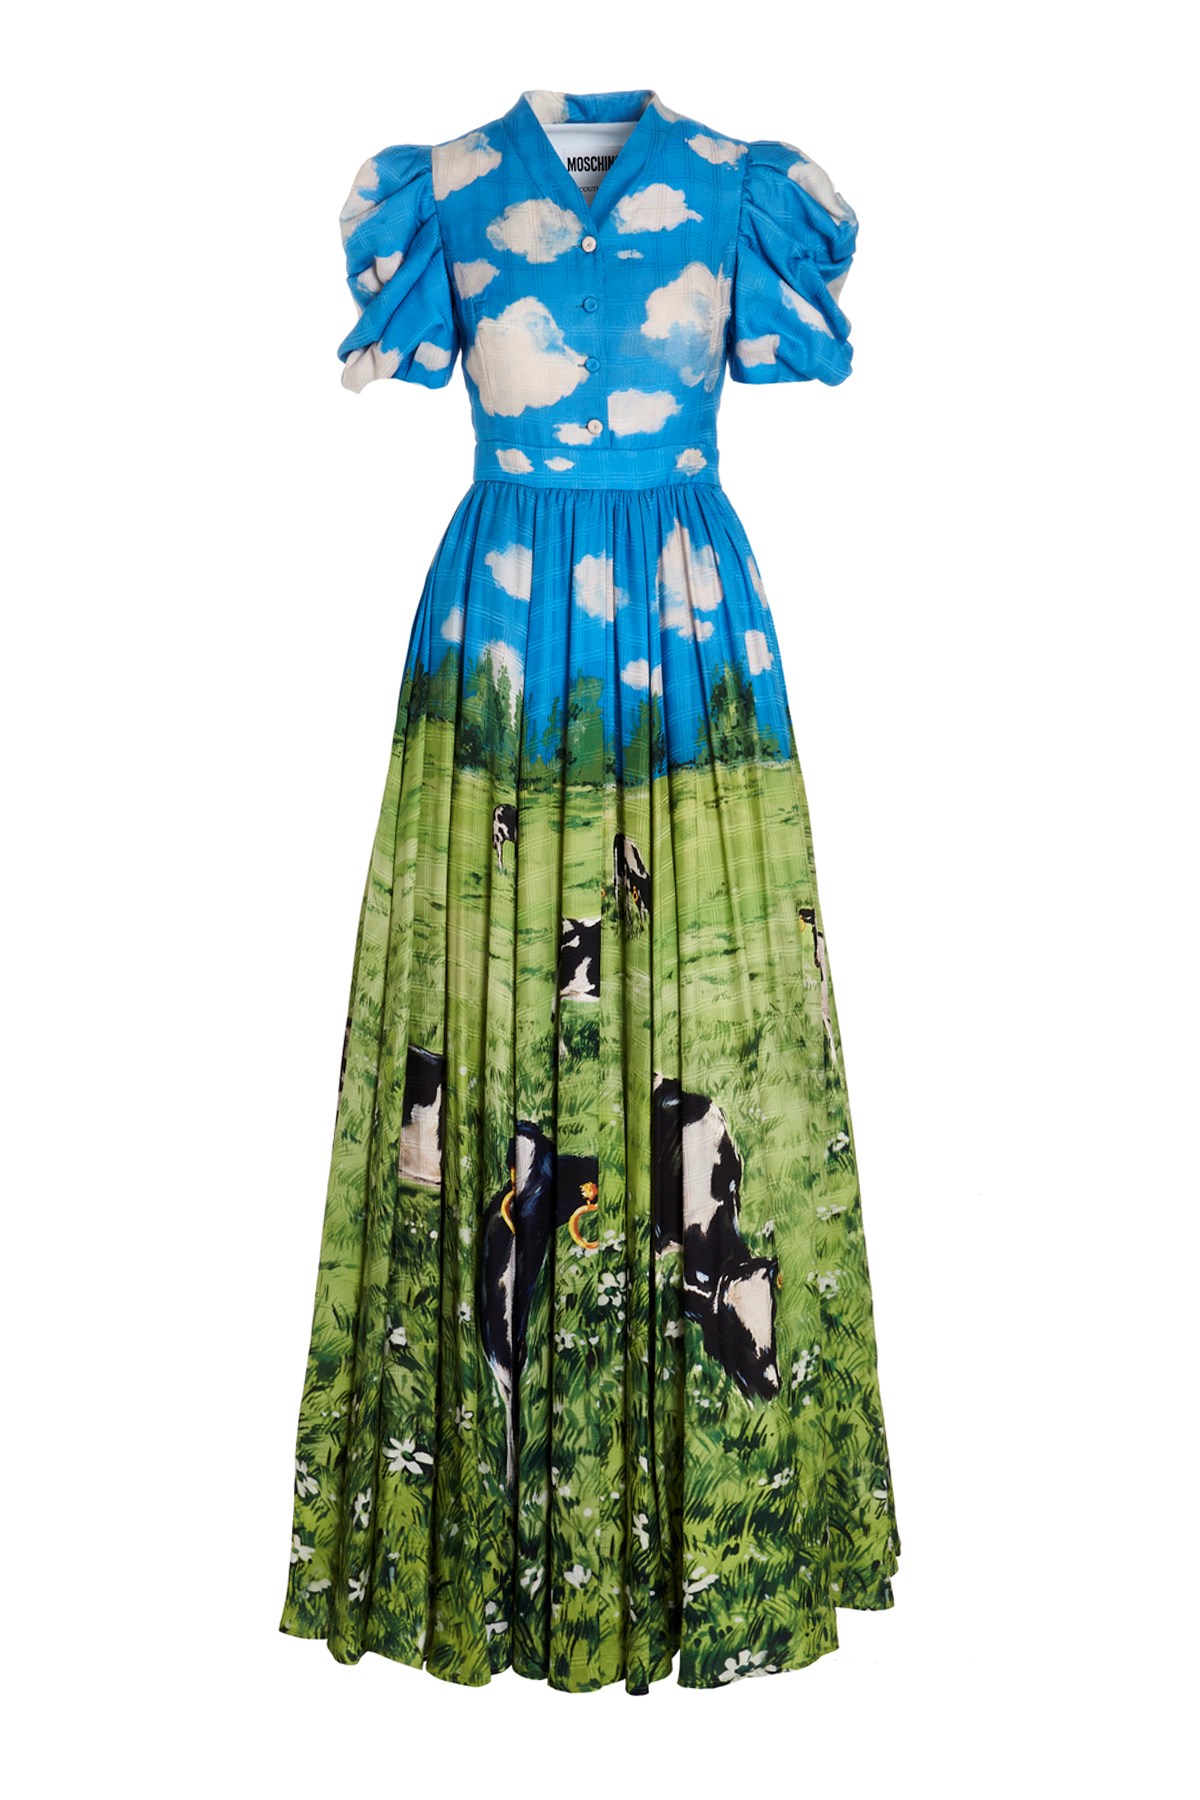 MOSCHINO 'Countryside’ Dress